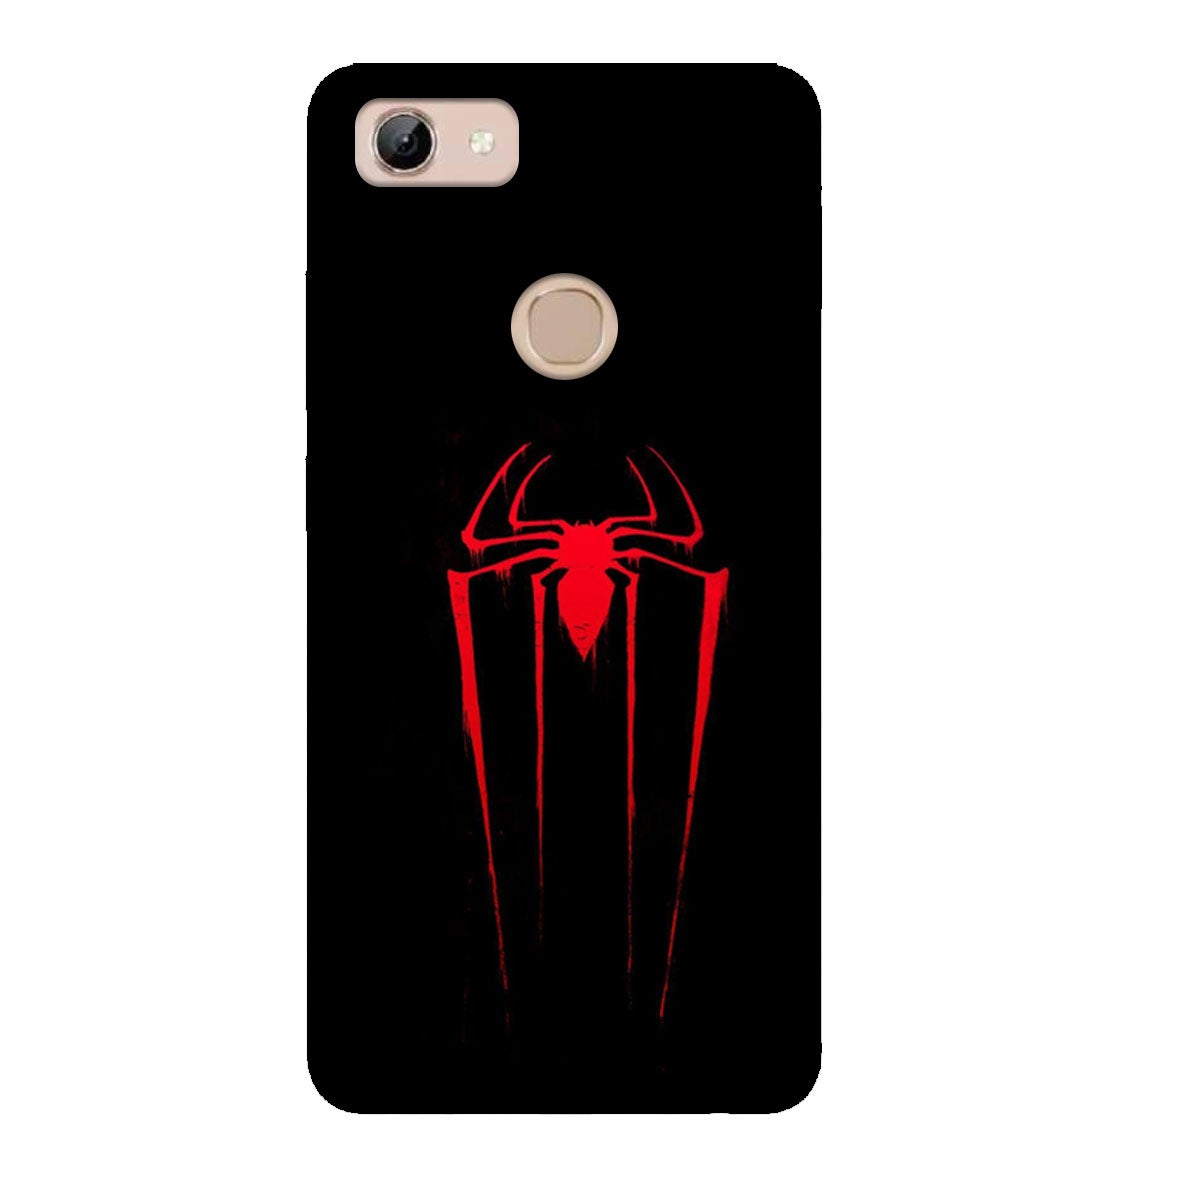 Spider Man - Black - Mobile Phone Cover - Hard Case - Vivo